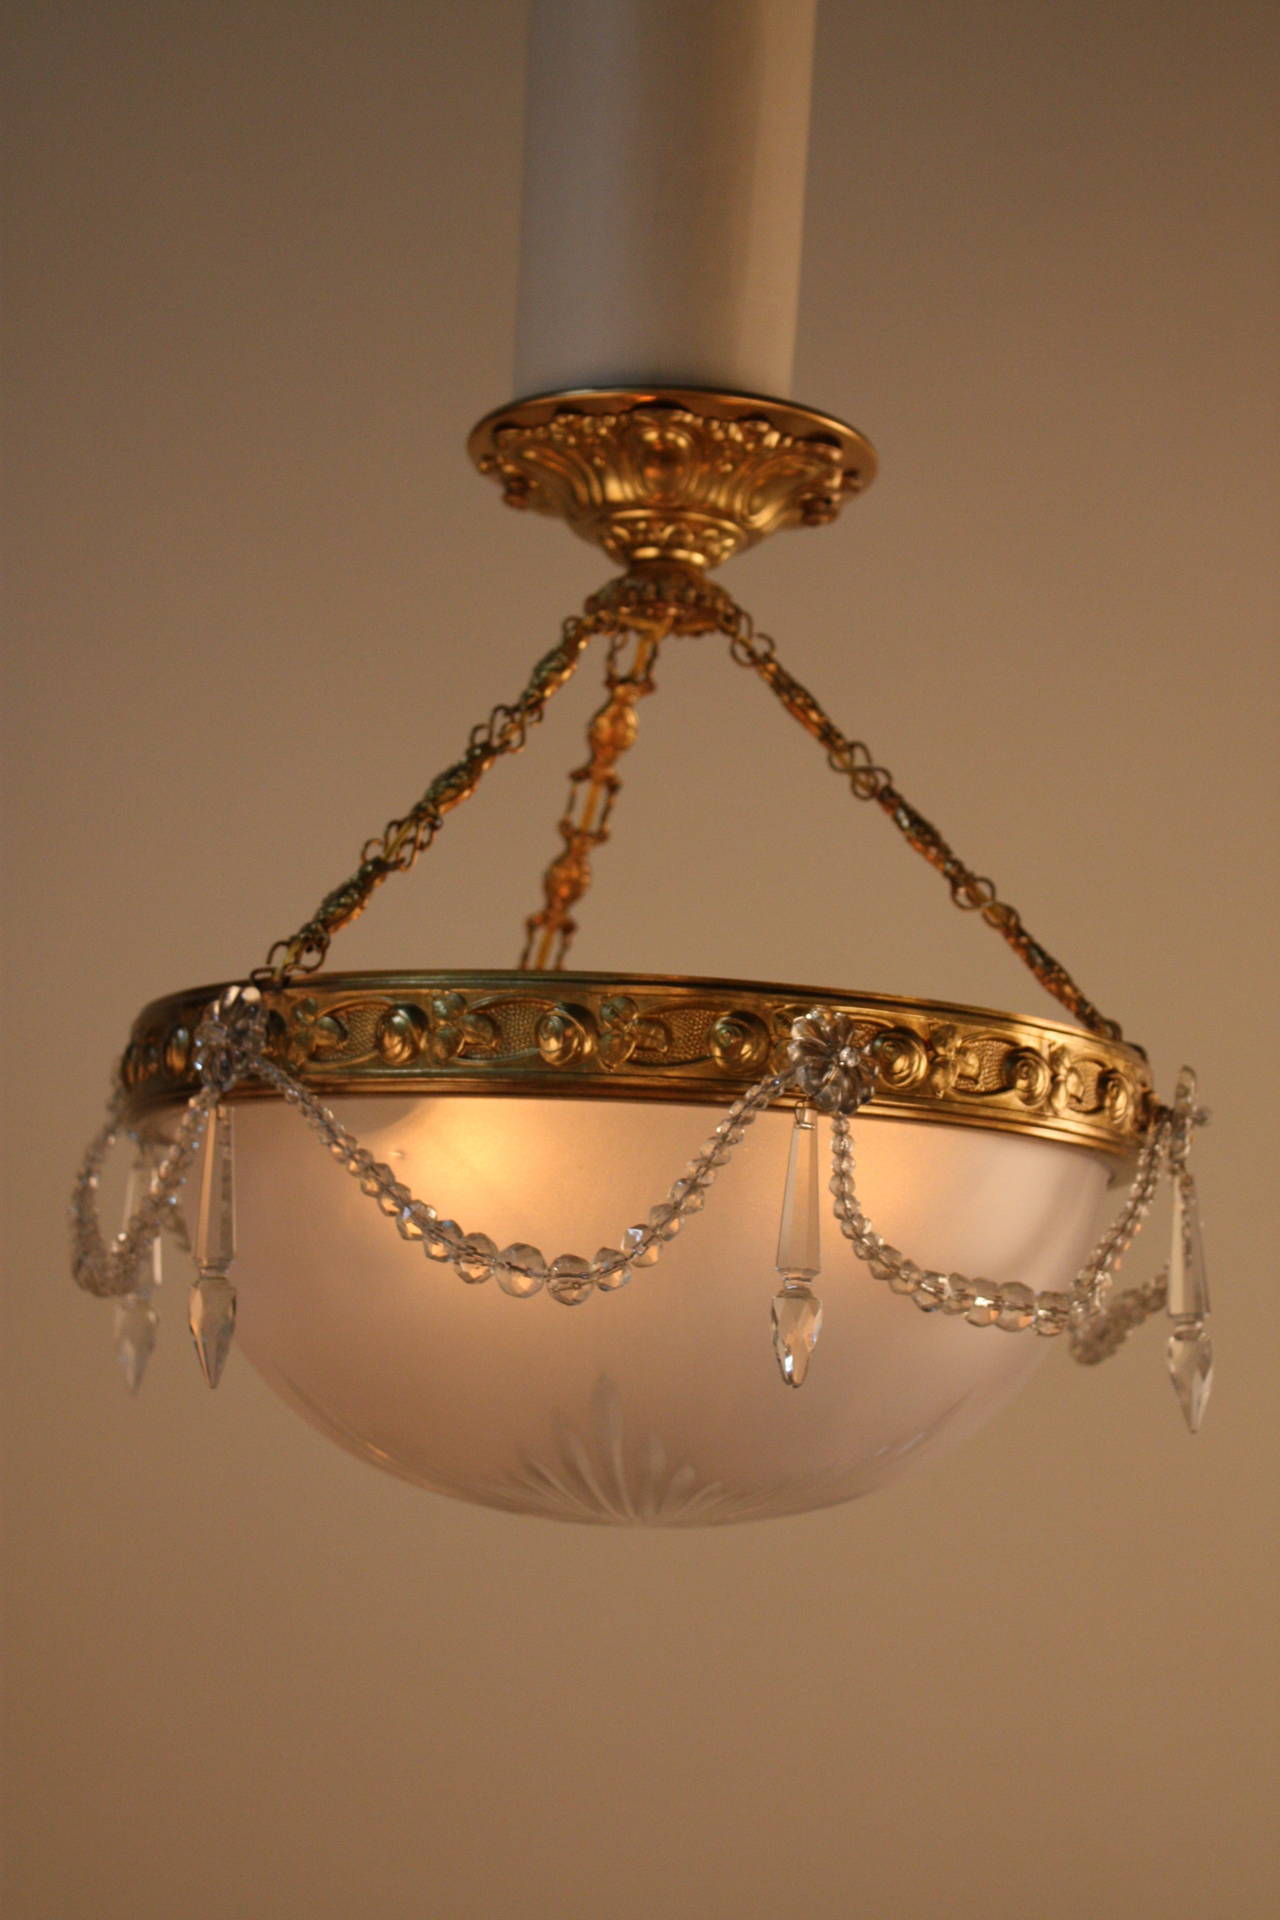 A beautiful three-light cut-glass and bronze hanging light.